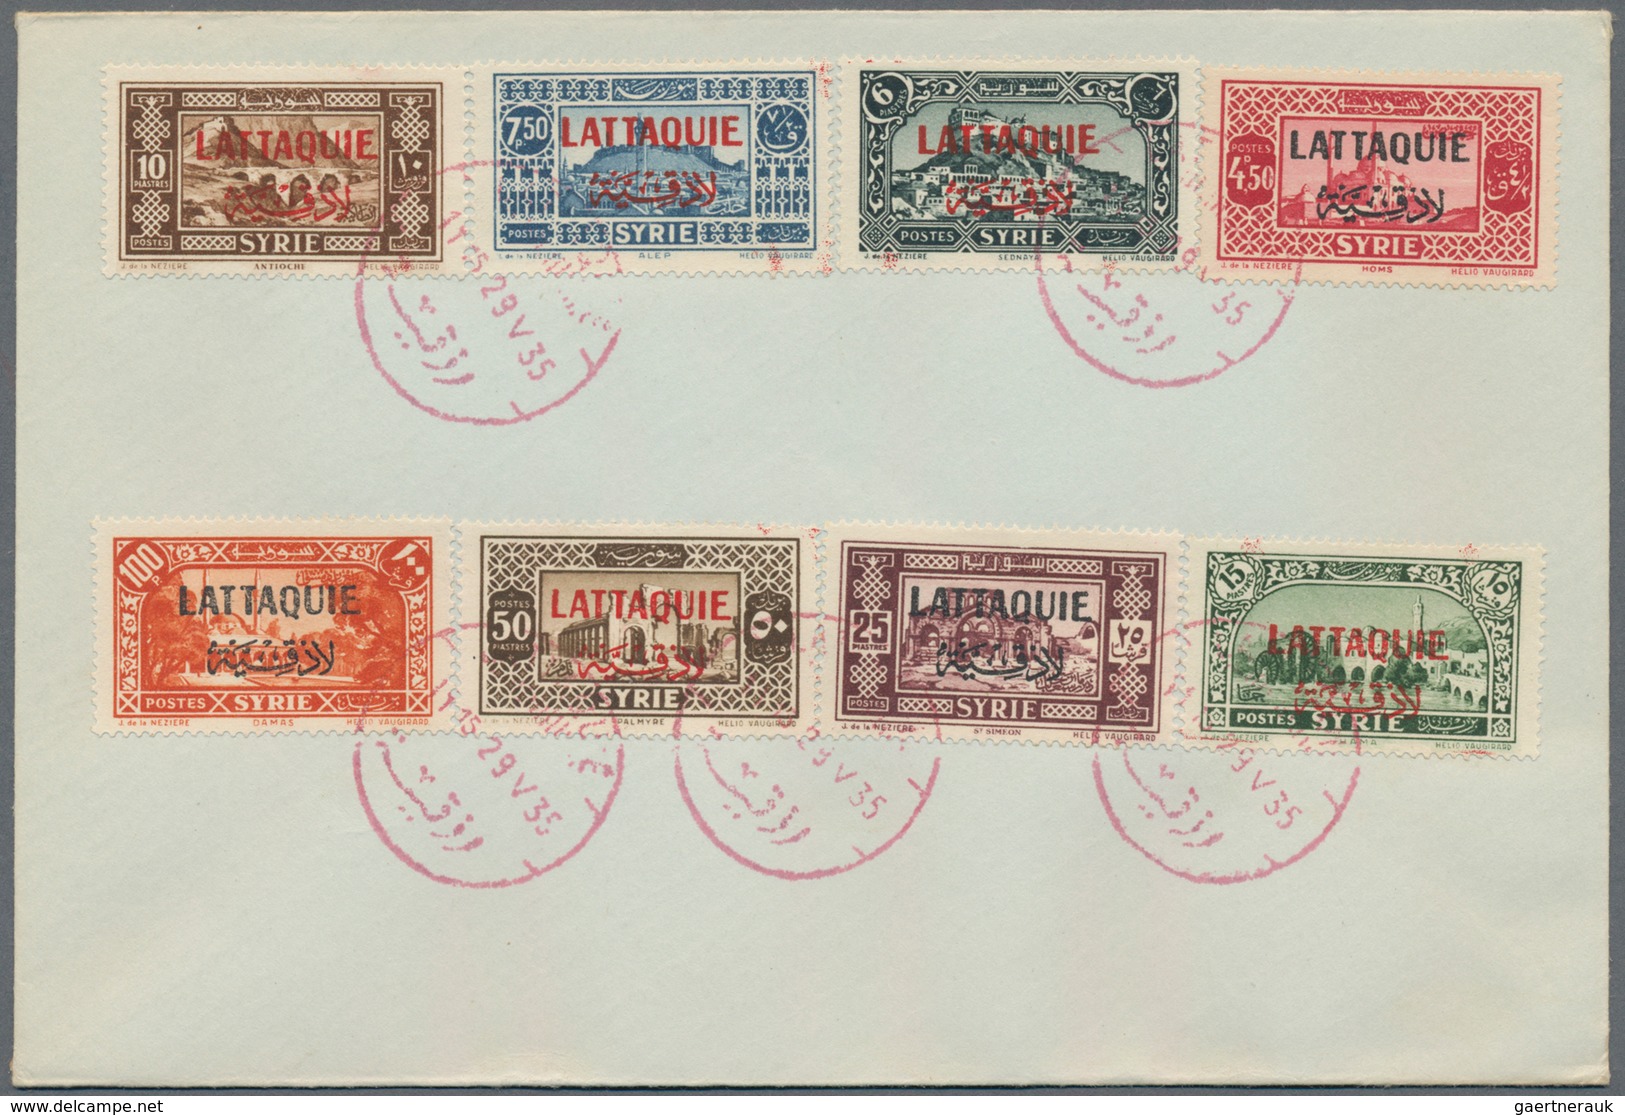 Latakia: 1924-35, Alaouites & Lattaquie 10 covers with complete set frankings (unadressed), fine gro